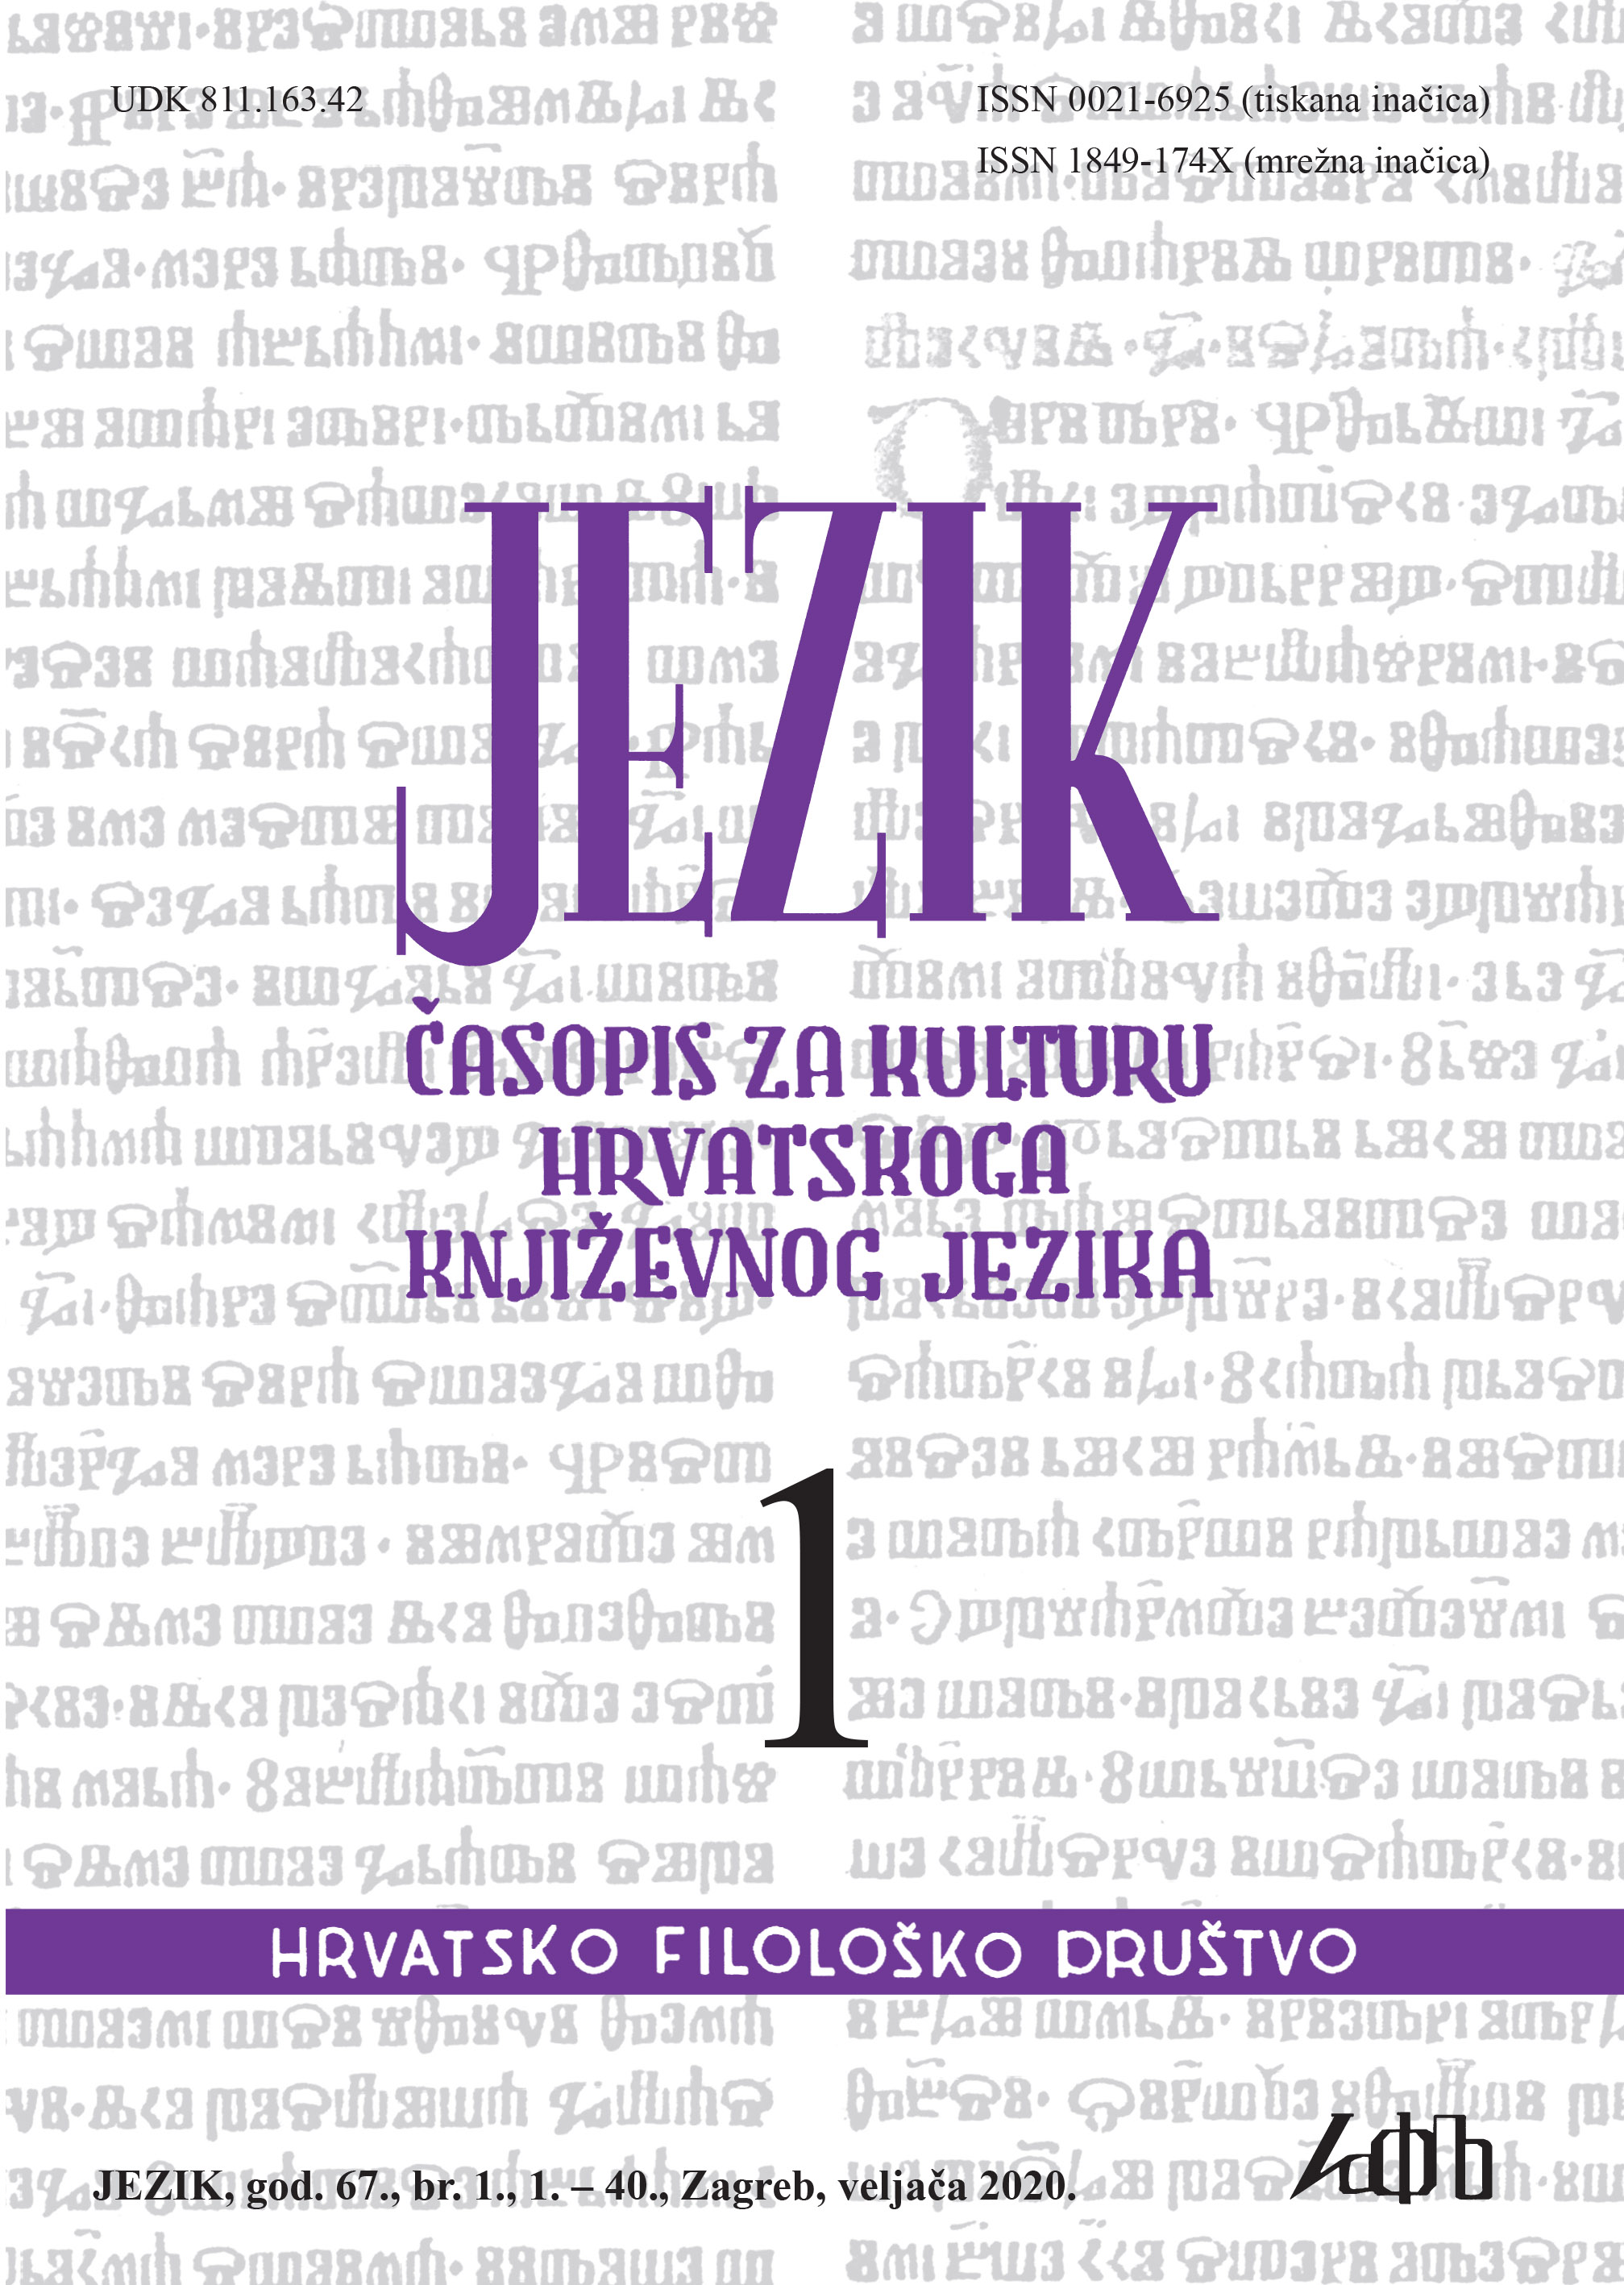 Brozović’s Jezik sadašnji (Language of Today) and the Declaration on the Name and Status of the Croatian Literary Language Cover Image